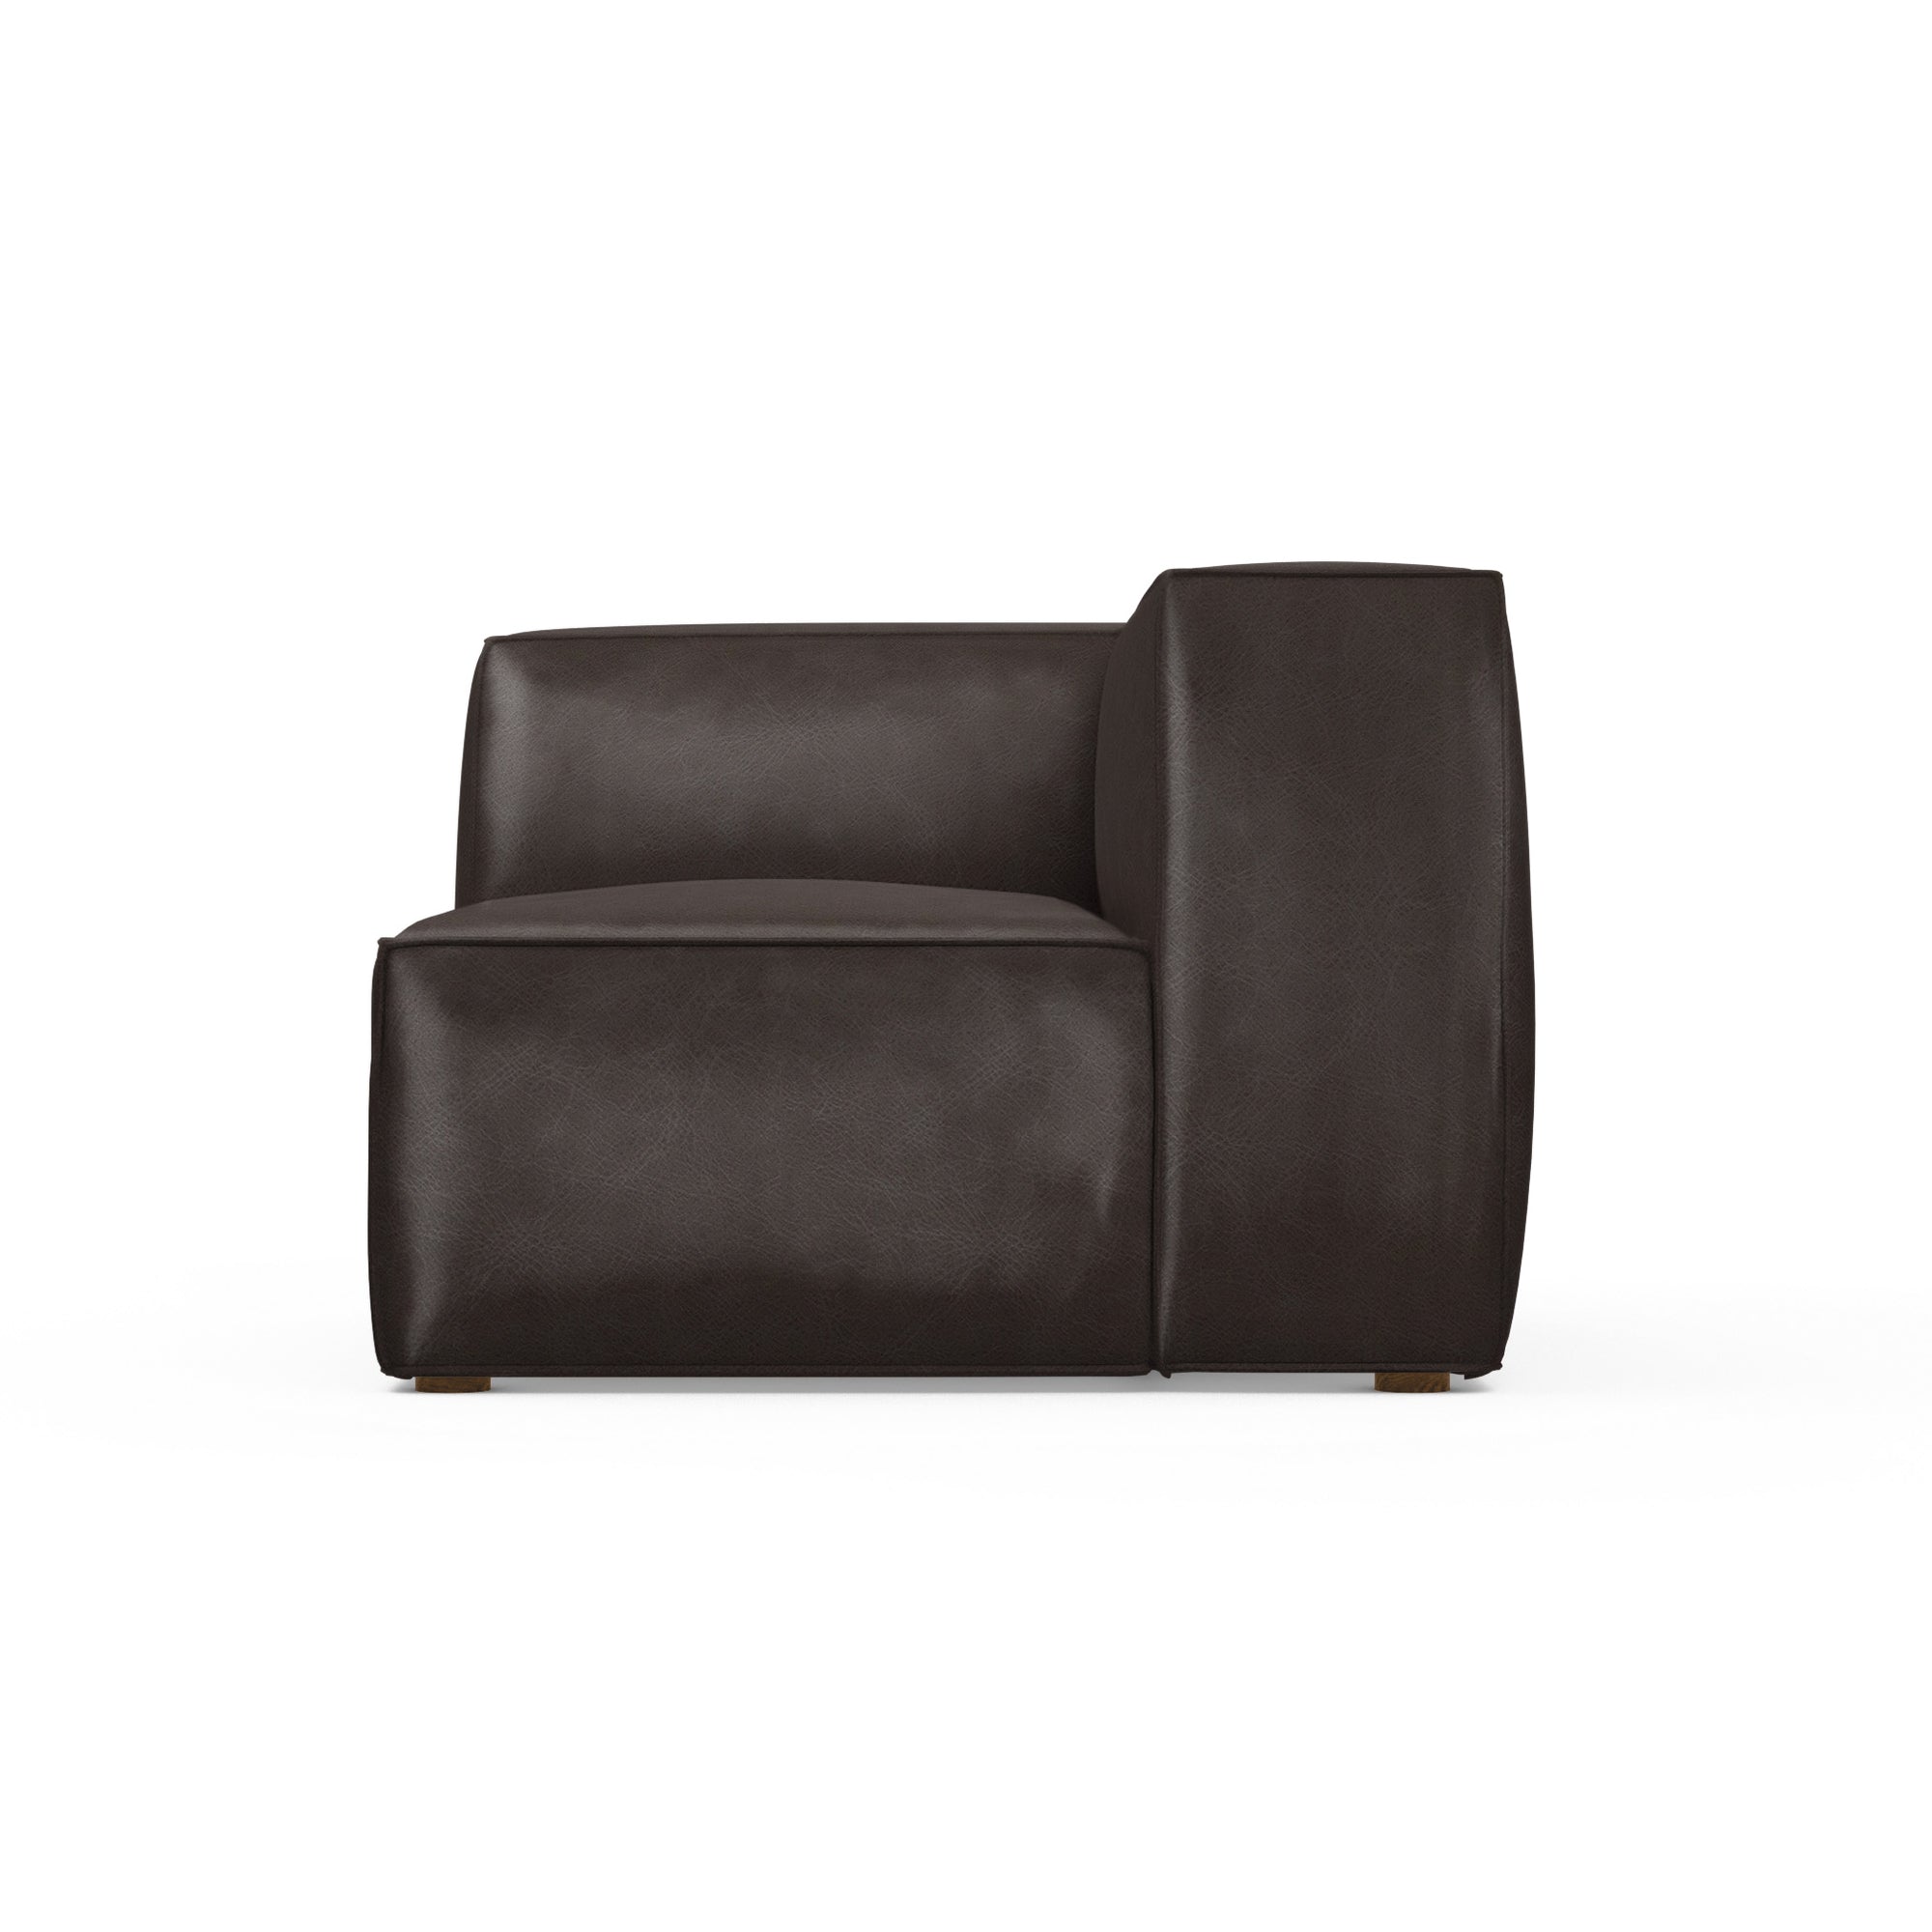 Varick Corner Chair - Chocolate Vintage Leather